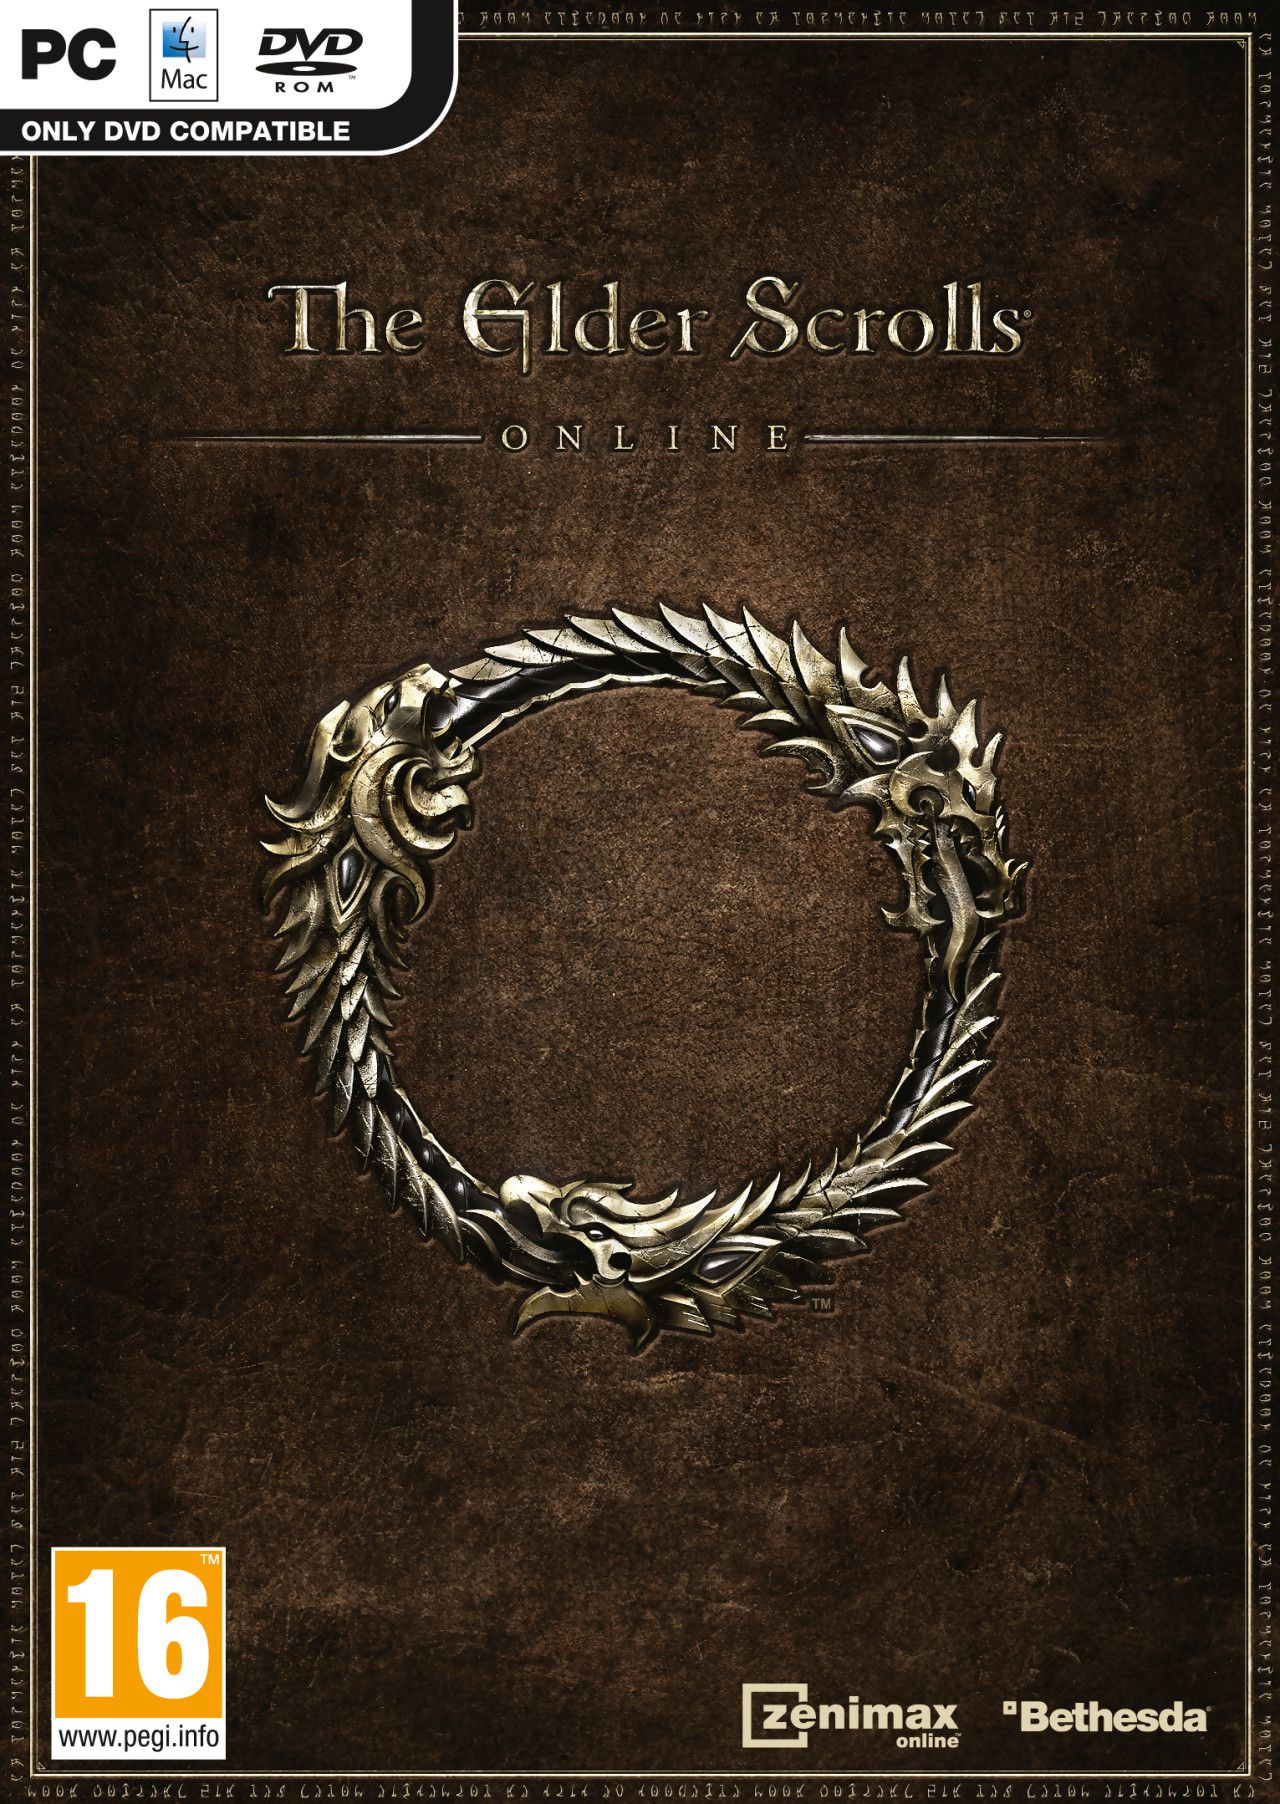 The Elder Scrolls Online (2014)  - Jeu vidéo